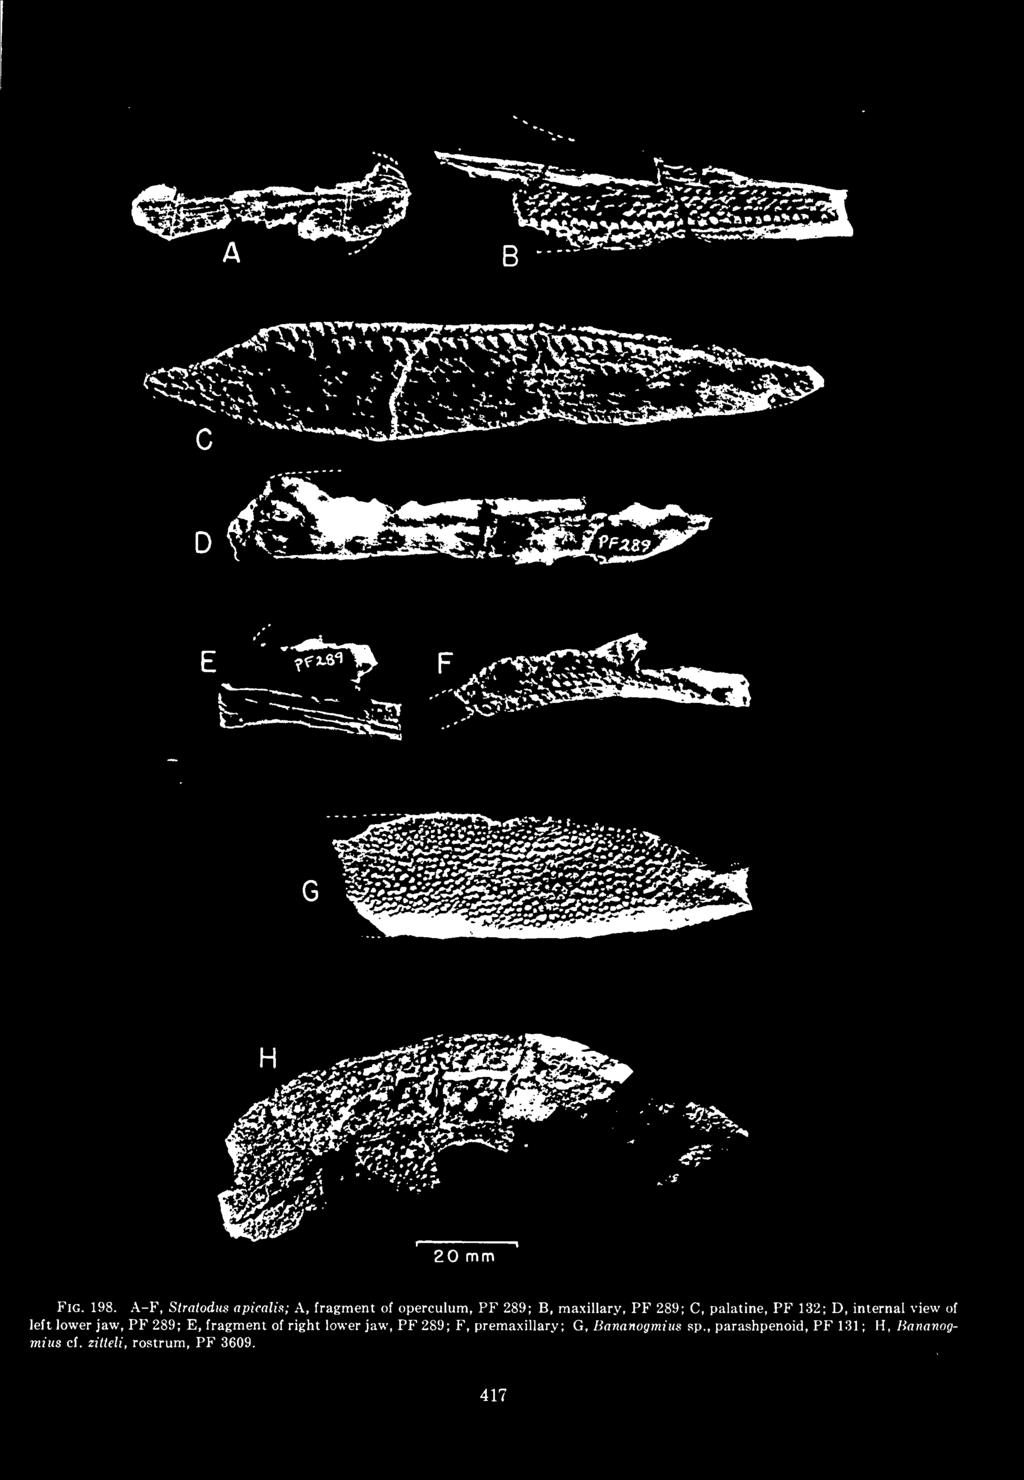 right lower jaw, PF 289; F, premaxillary; G, Bananogmuis